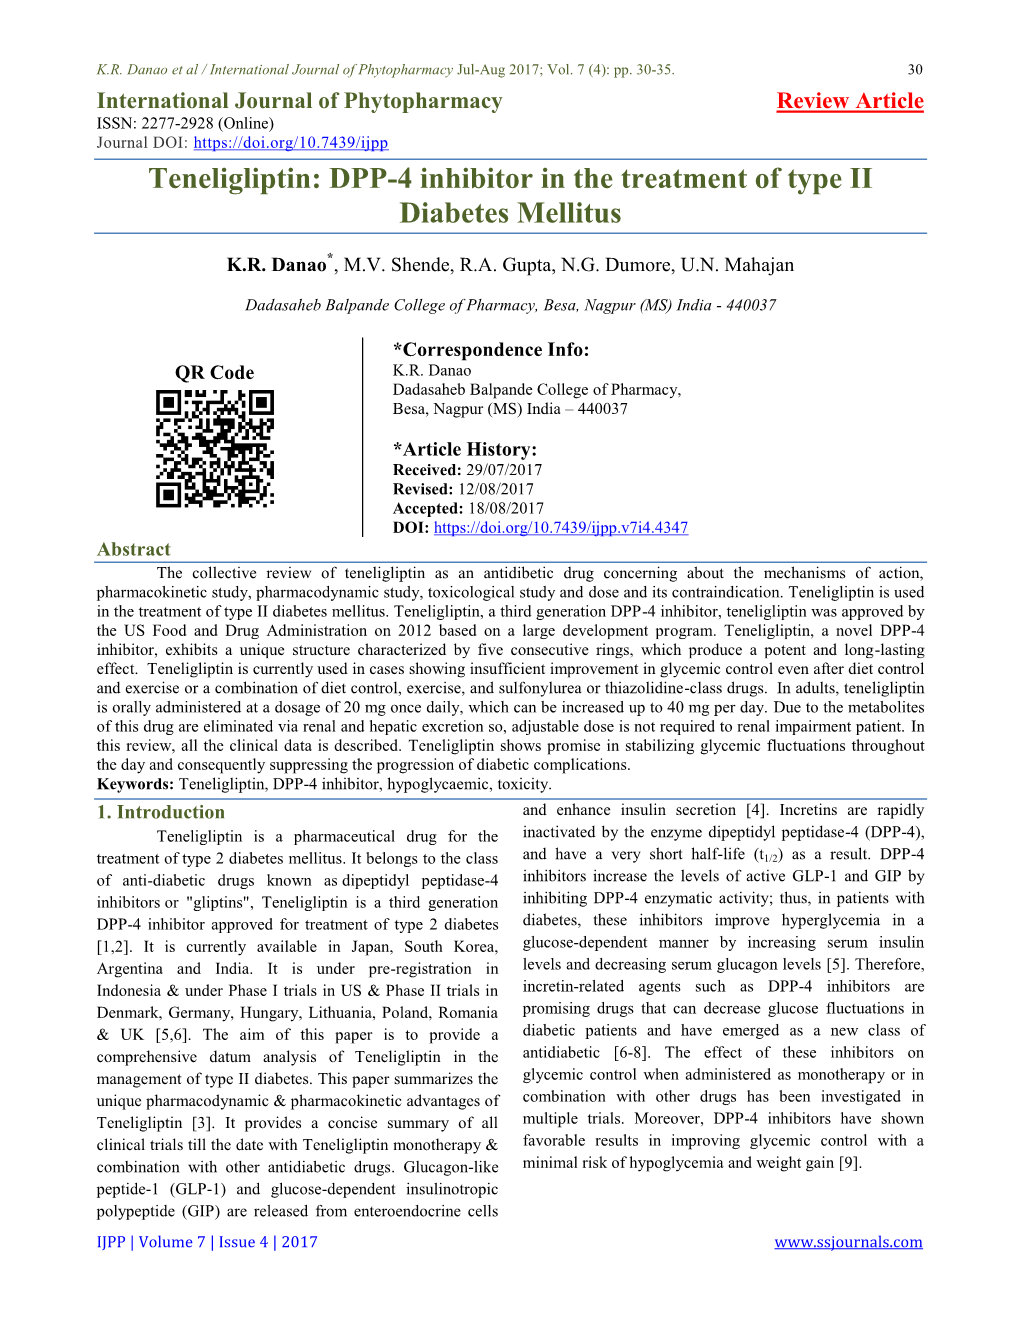 Teneligliptin: DPP-4 Inhibitor in the Treatment of Type II Diabetes Mellitus